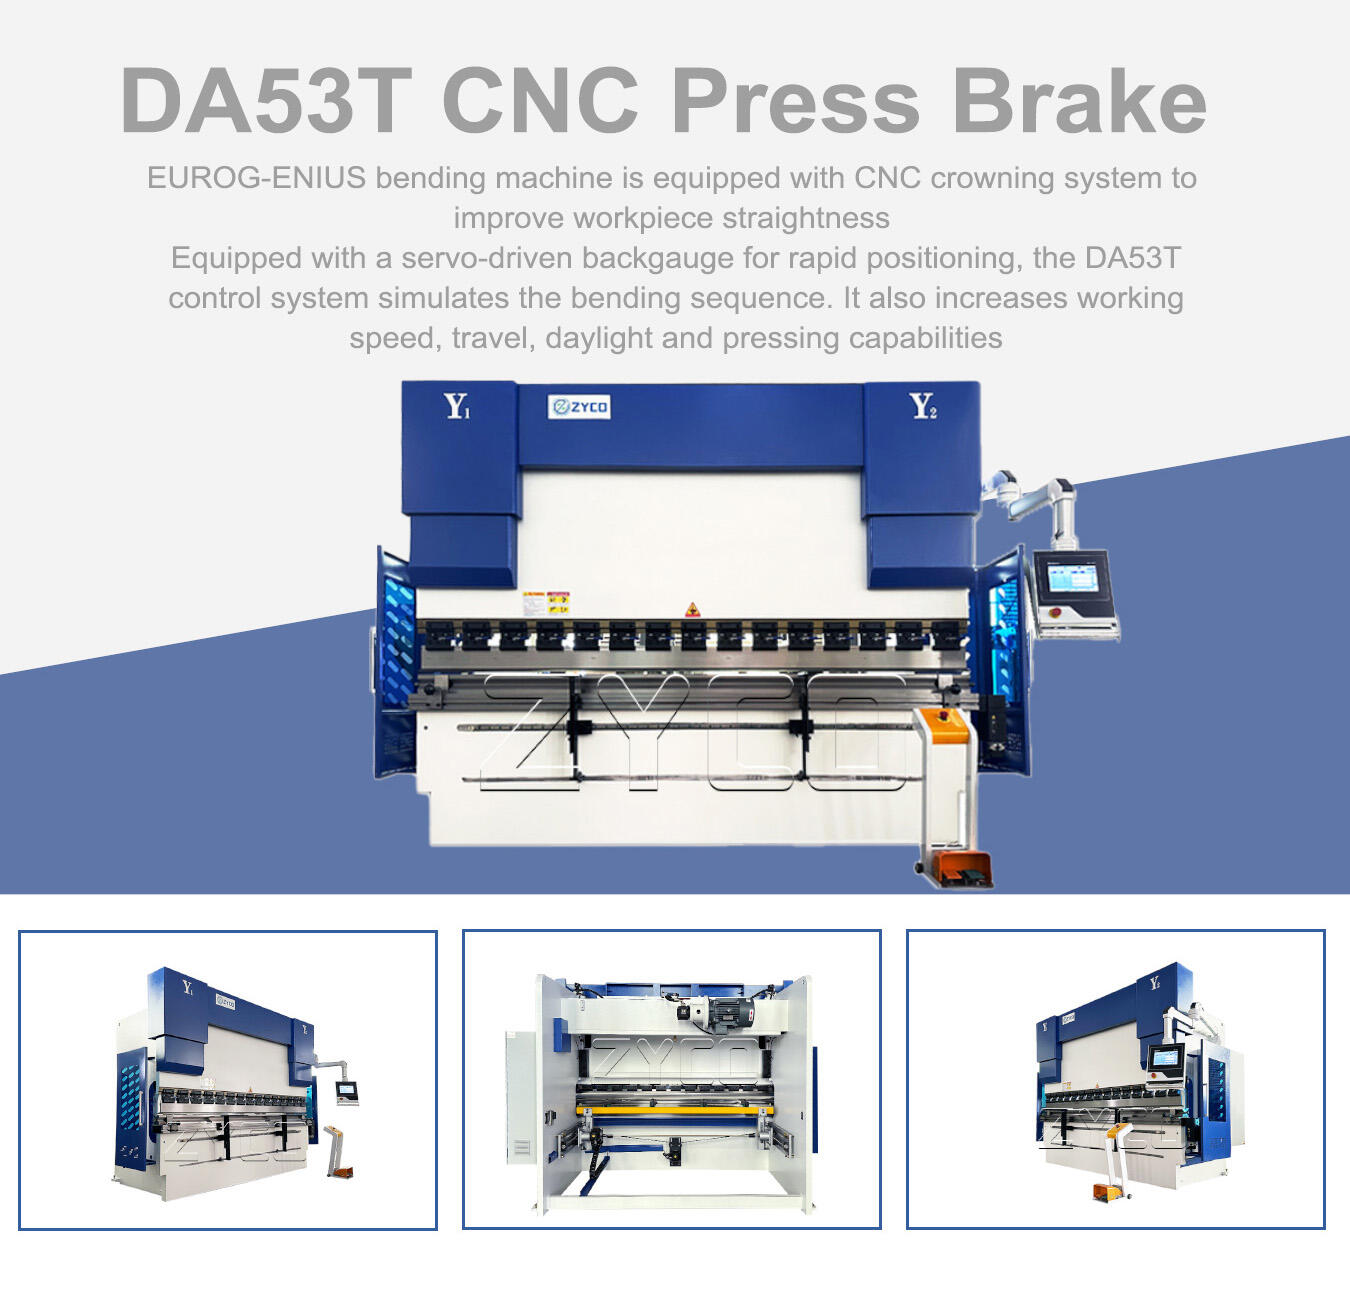 DA53T CNC Press Brake details